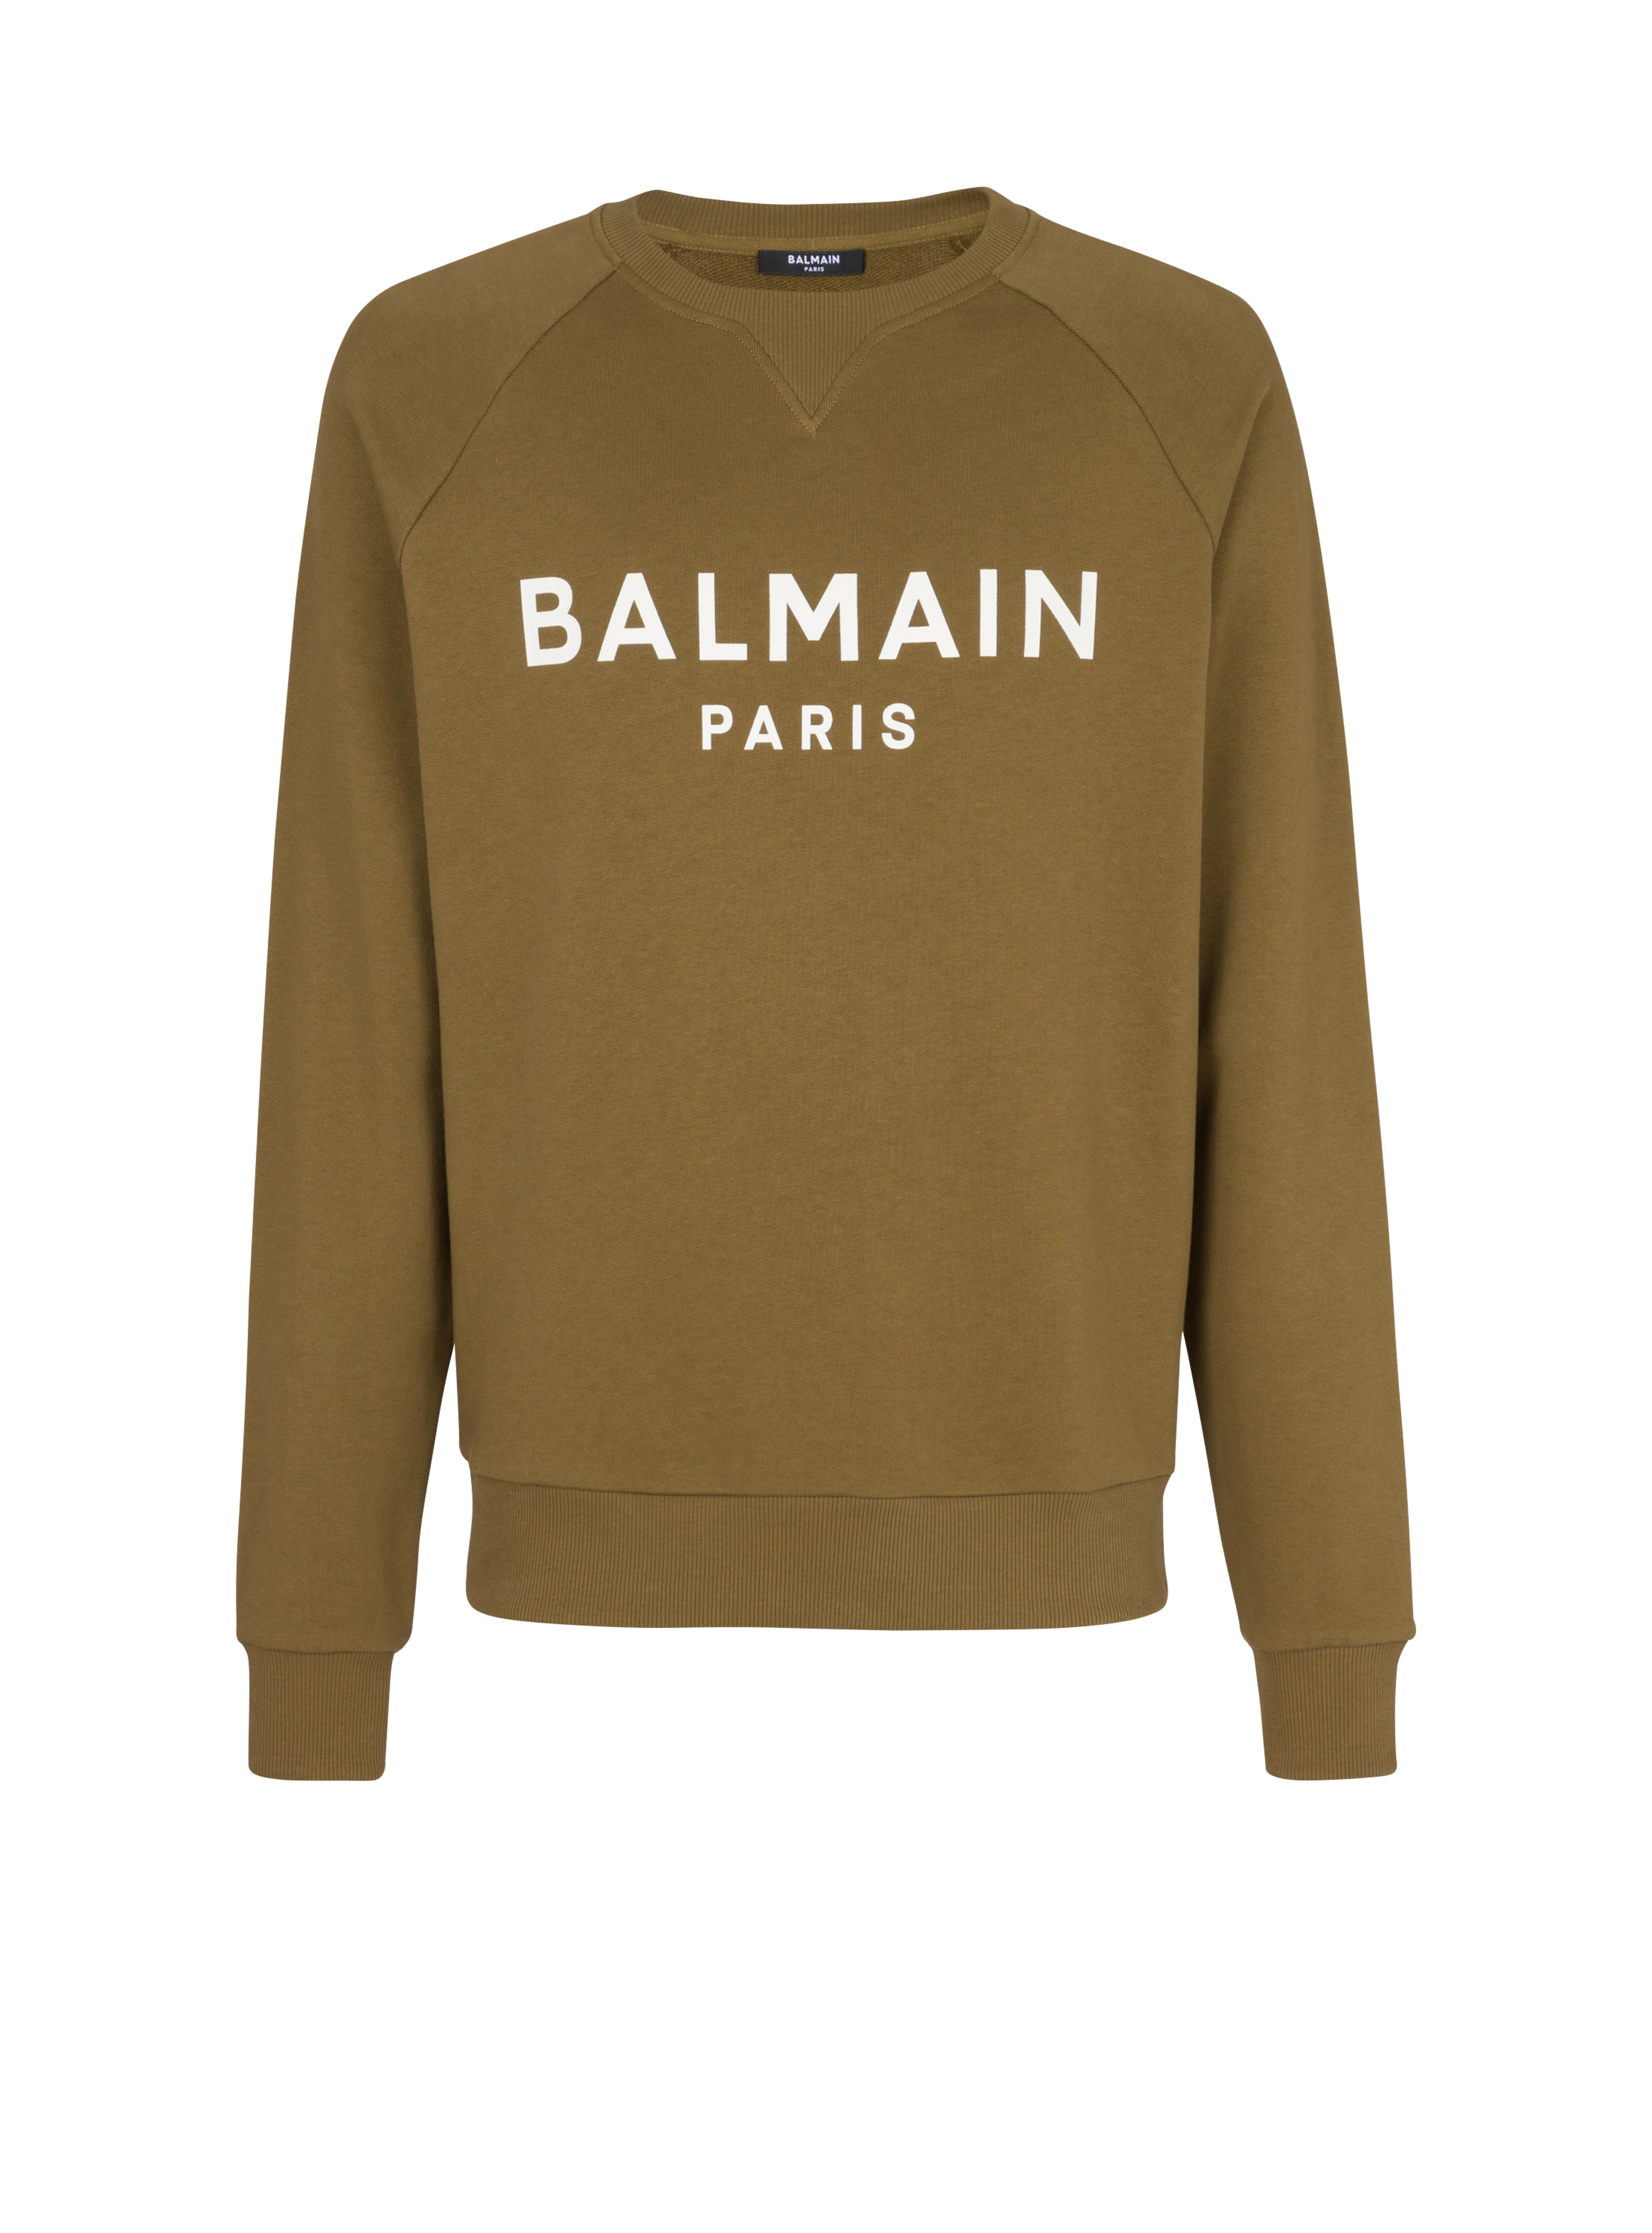 Balmain巴尔曼标志印花棉质运动衫, khaki